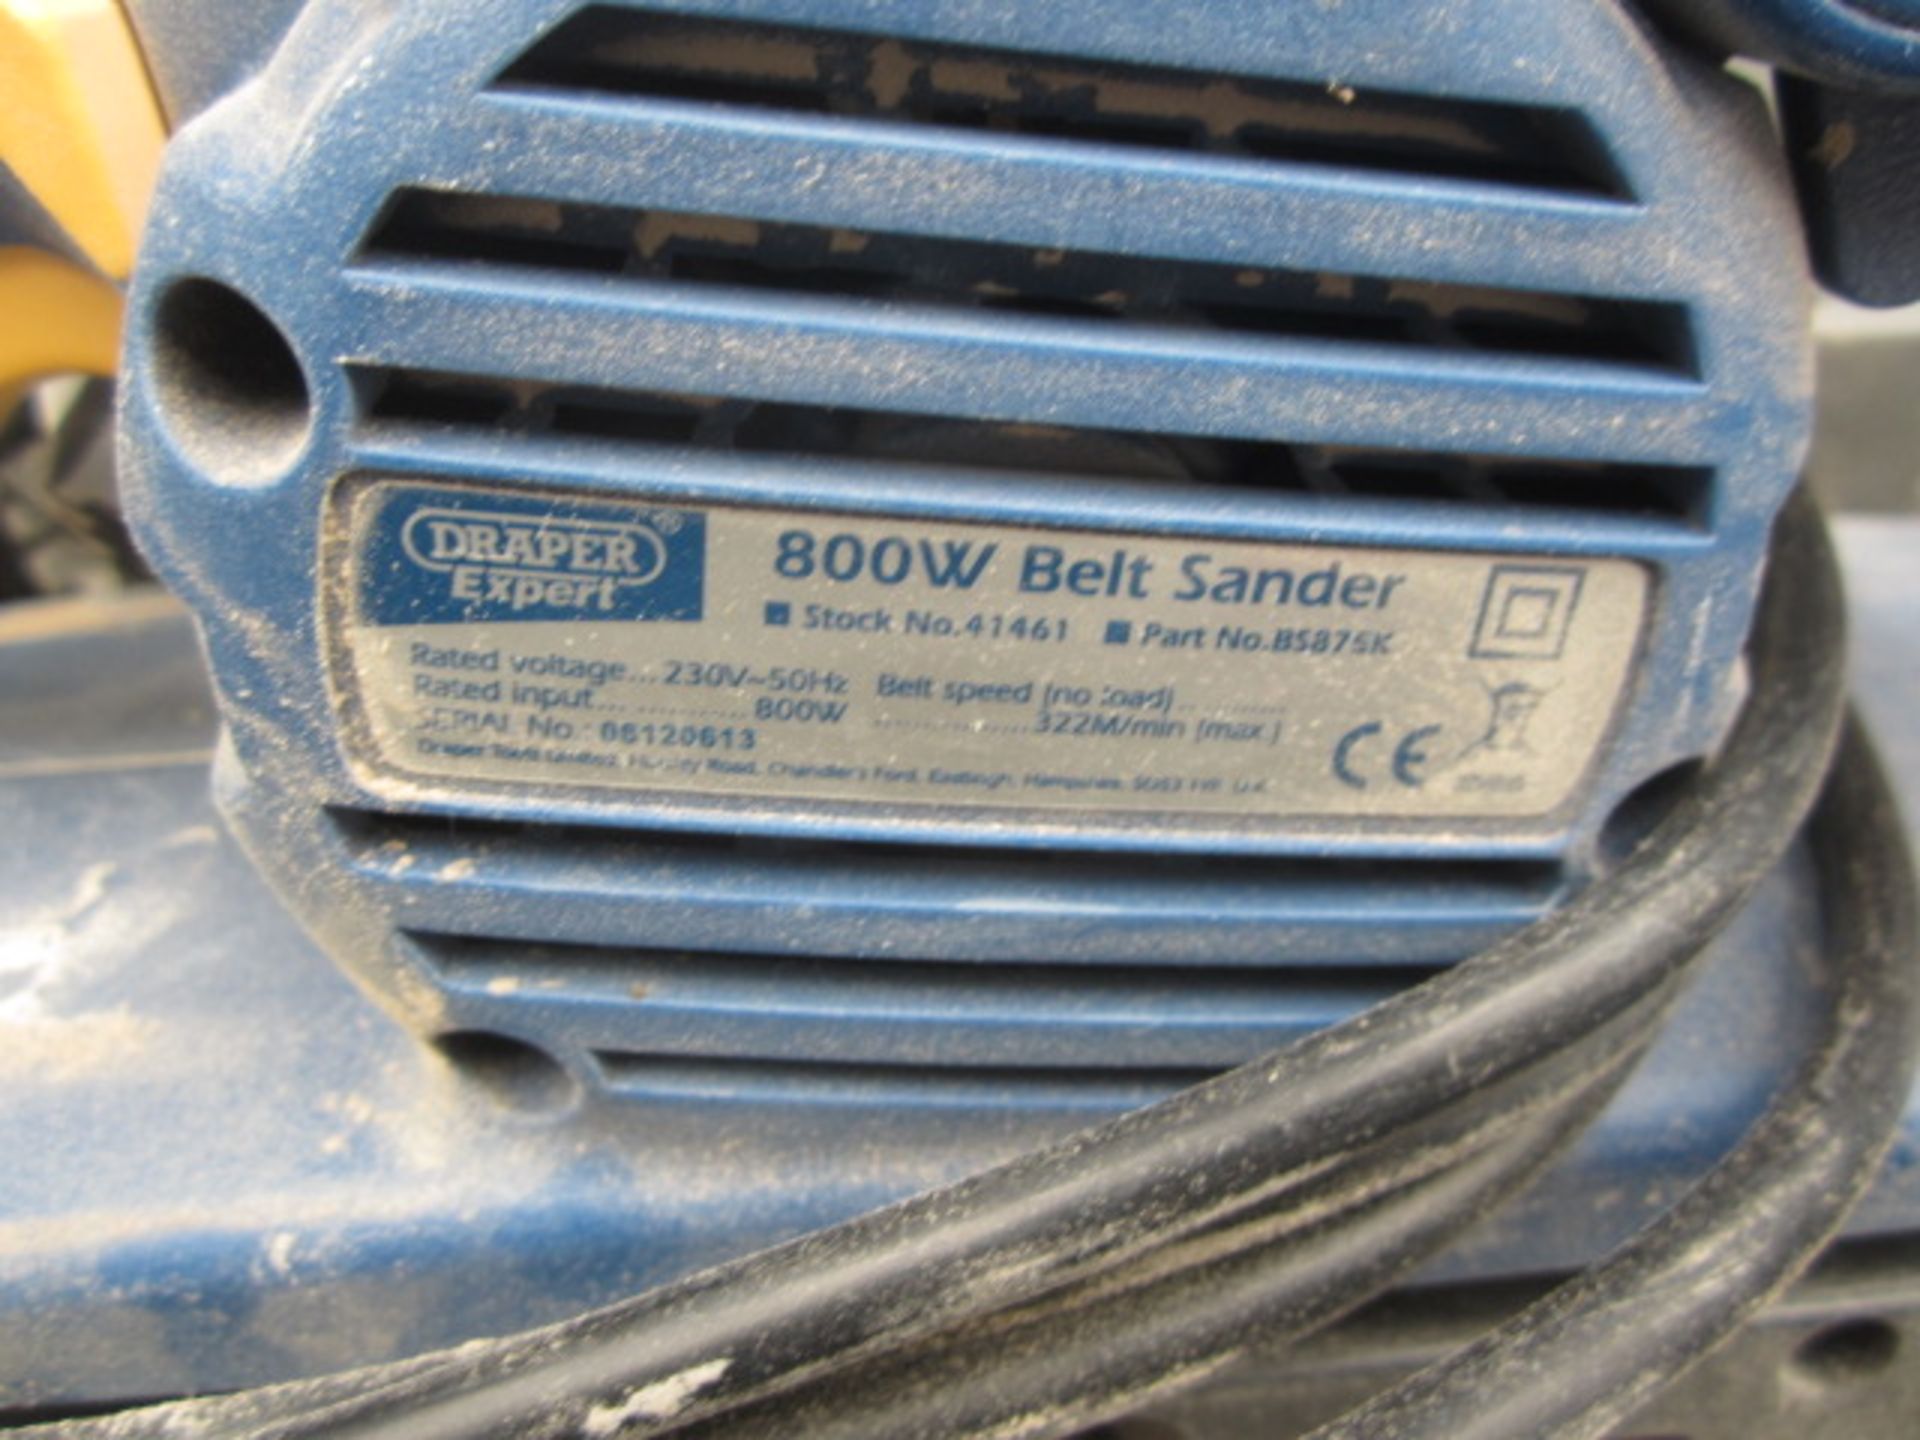 Draper Expert 800W belt sander, stock no. 41461, part no. BS875K, serial no. 06120613 - Image 3 of 3